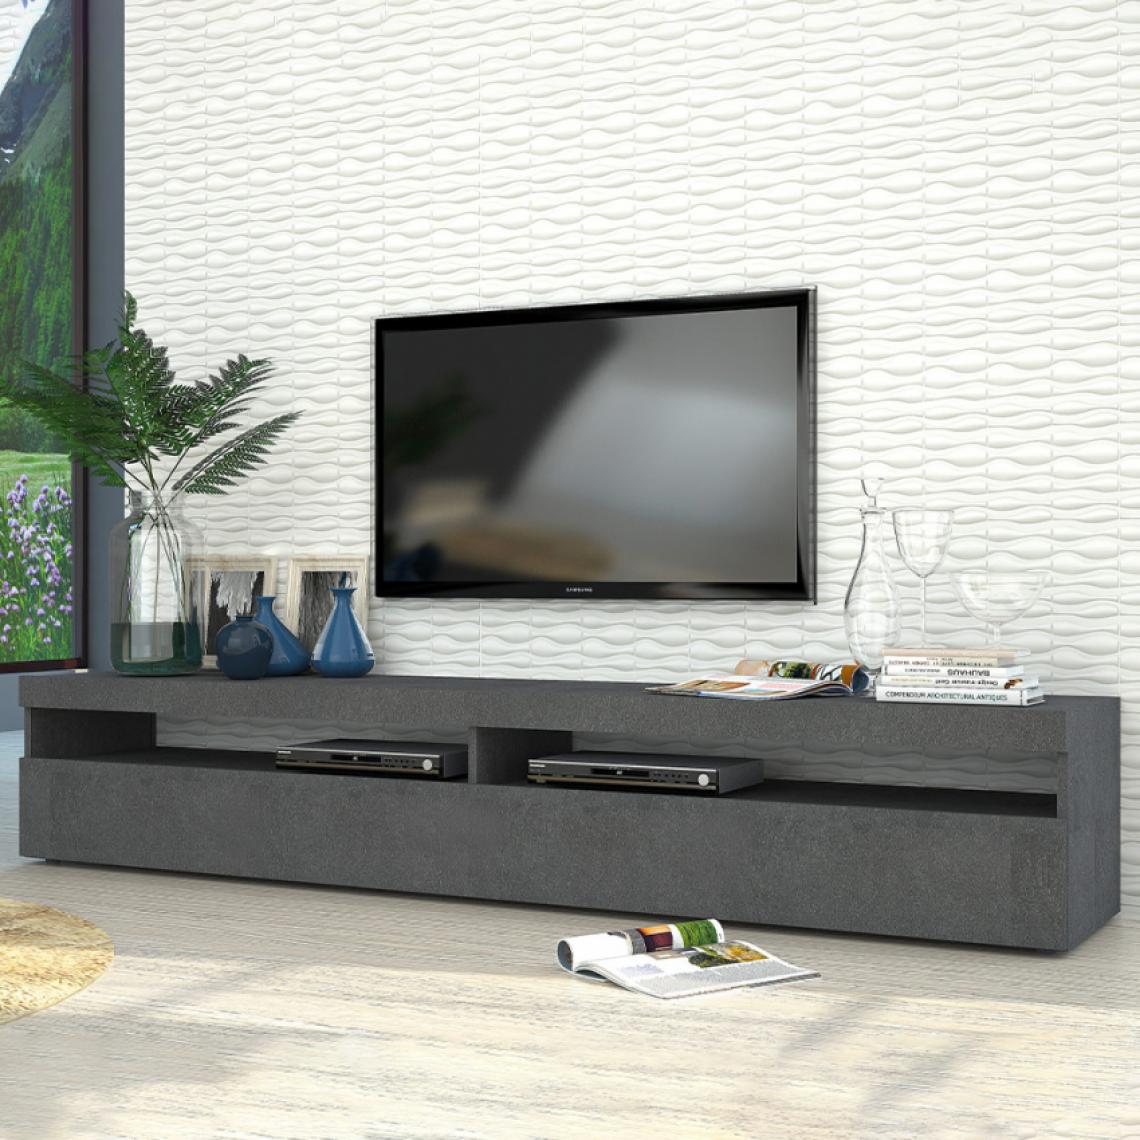 Ahd Amazing Home Design - Meuble TV Anthracite Design Salon 200cm 4 Compartiments 2 Portes Burrata Report - Meubles TV, Hi-Fi